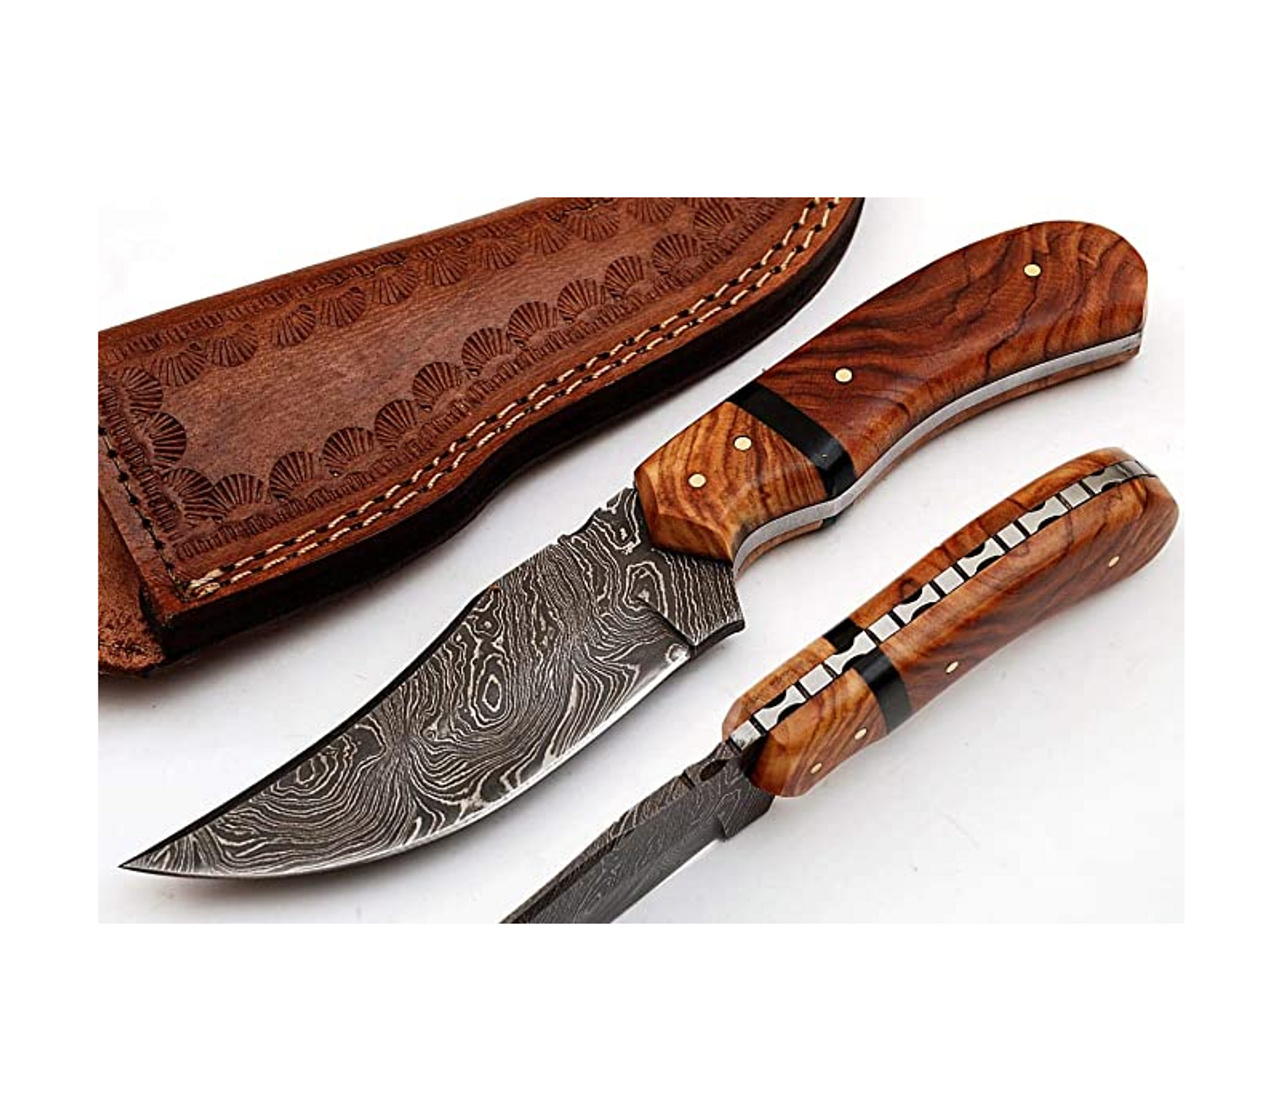 Handmade sheath and handmade Damascus knife. Sheath is top quality full  grain 100% cowhide 8-9oz thick leather made in USA. Knife is handmade  forged Damascu…